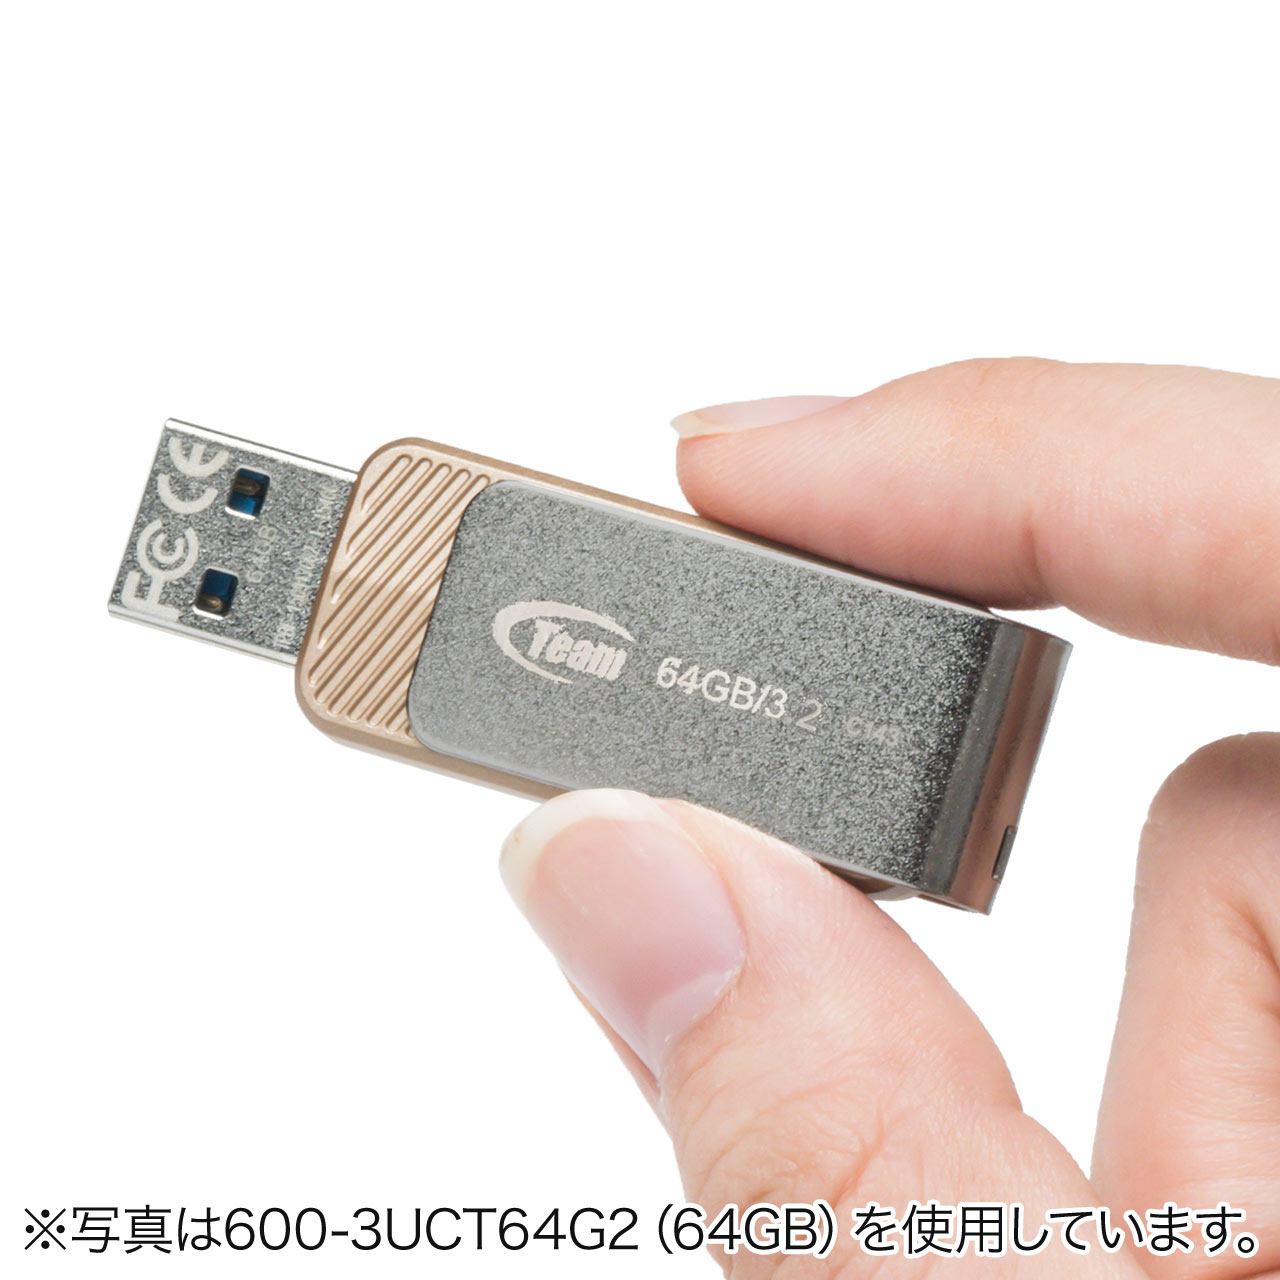 KIOXIA(キオクシア) (国内正規品)TransMemory U301 USBフラッシュメモリ 128GB ライトブルー キャップ式 USB 3.2 Gen 1、USB 2.0に対応 KUC-3A128GL 返品種別B